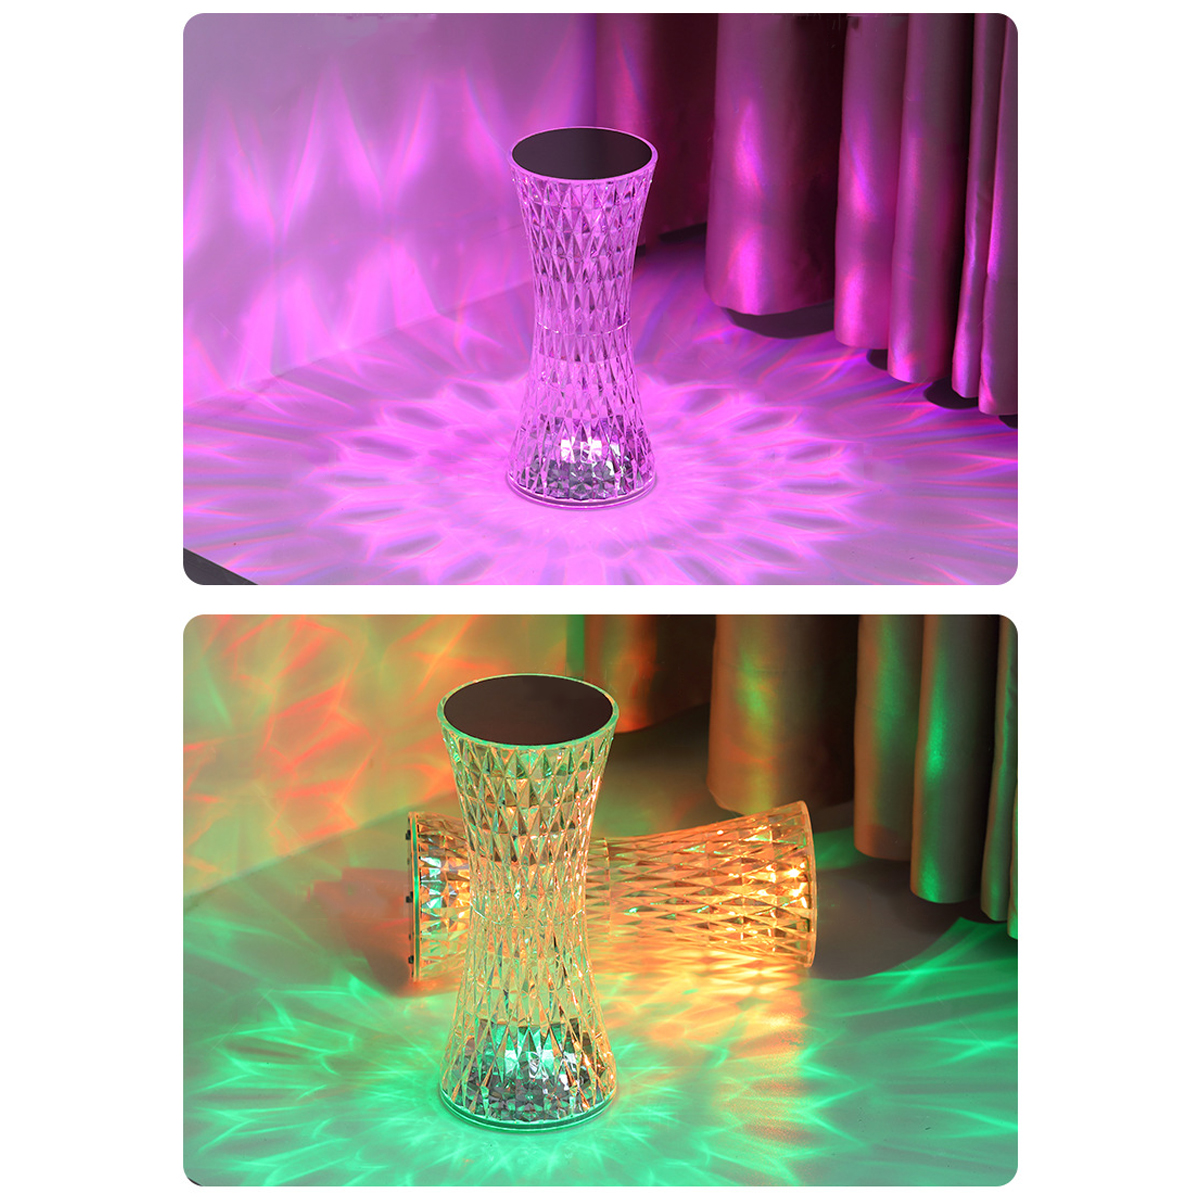 RGBWhite-Atmosphere-Light-Touch-Sensor-USB-Charging-Acrylic-Lamp-Bar-Light-Restaurant-Table-Lamps-Ro-1937232-12